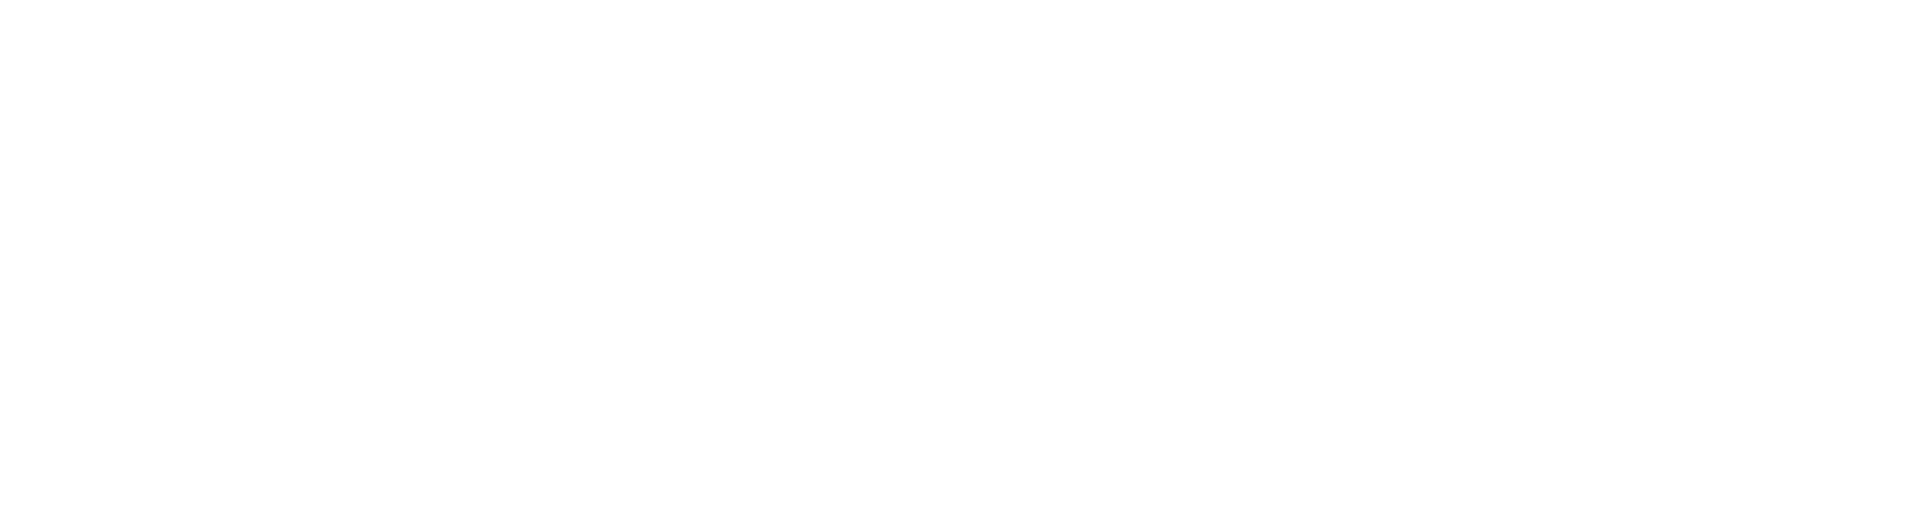 Minimalist Console